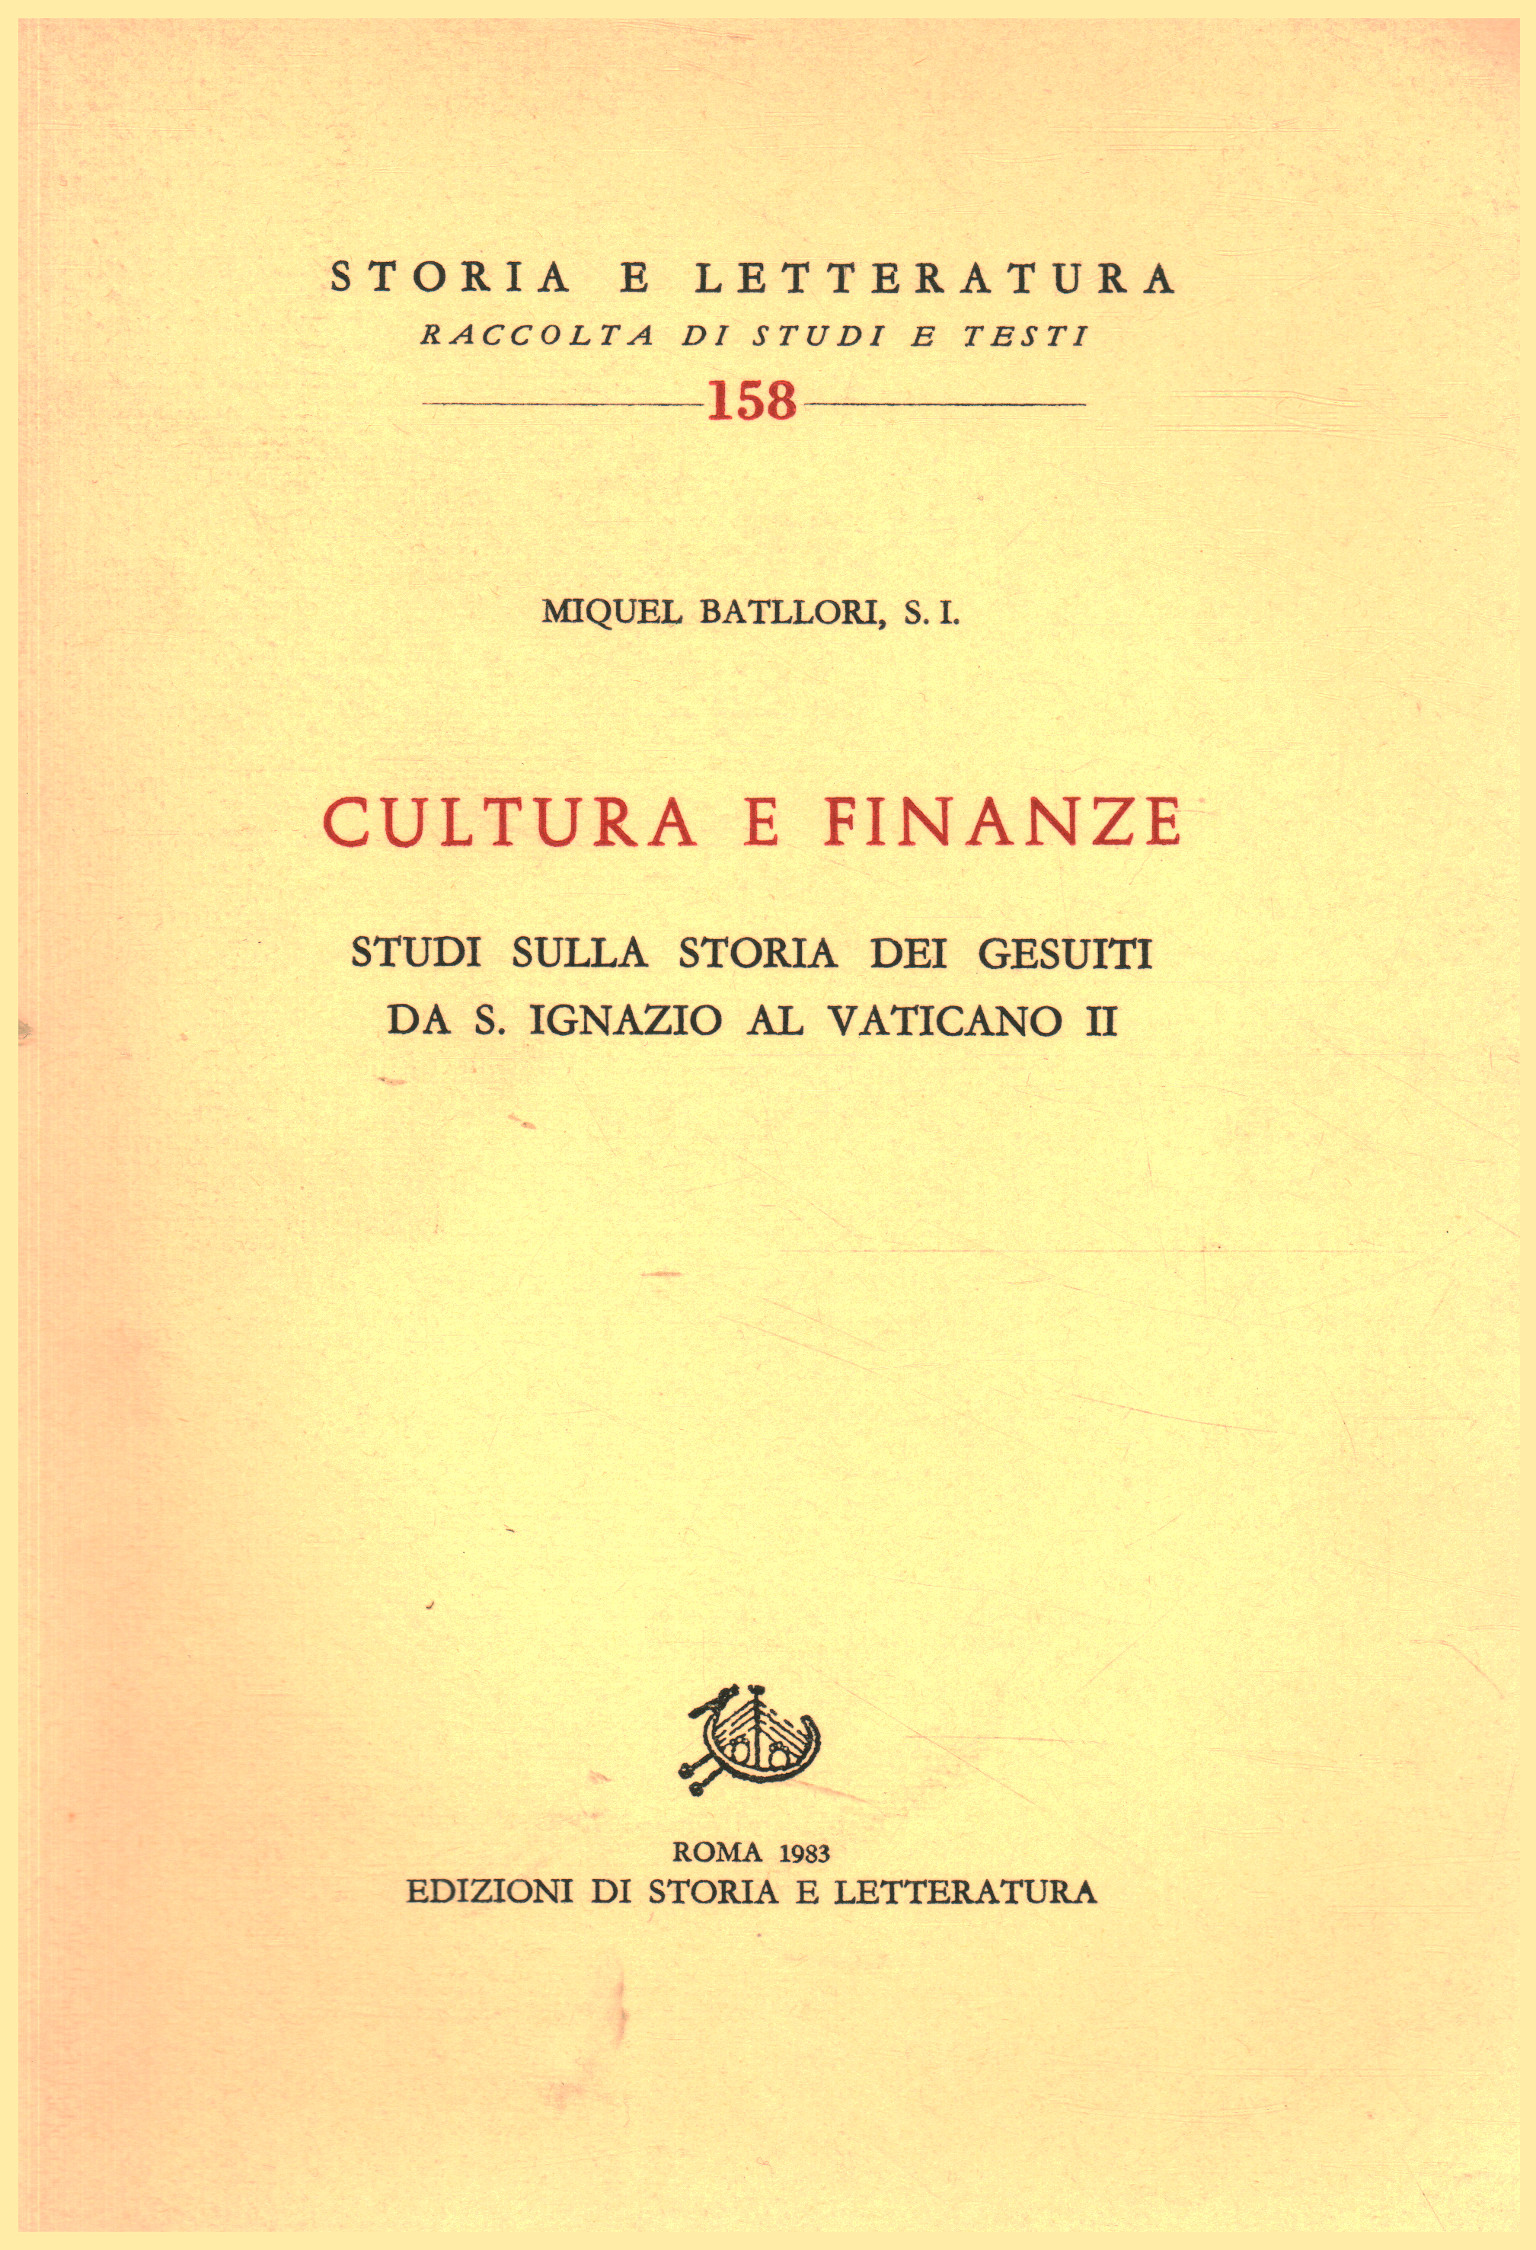 Cultura e finanze, Miquel Batllori